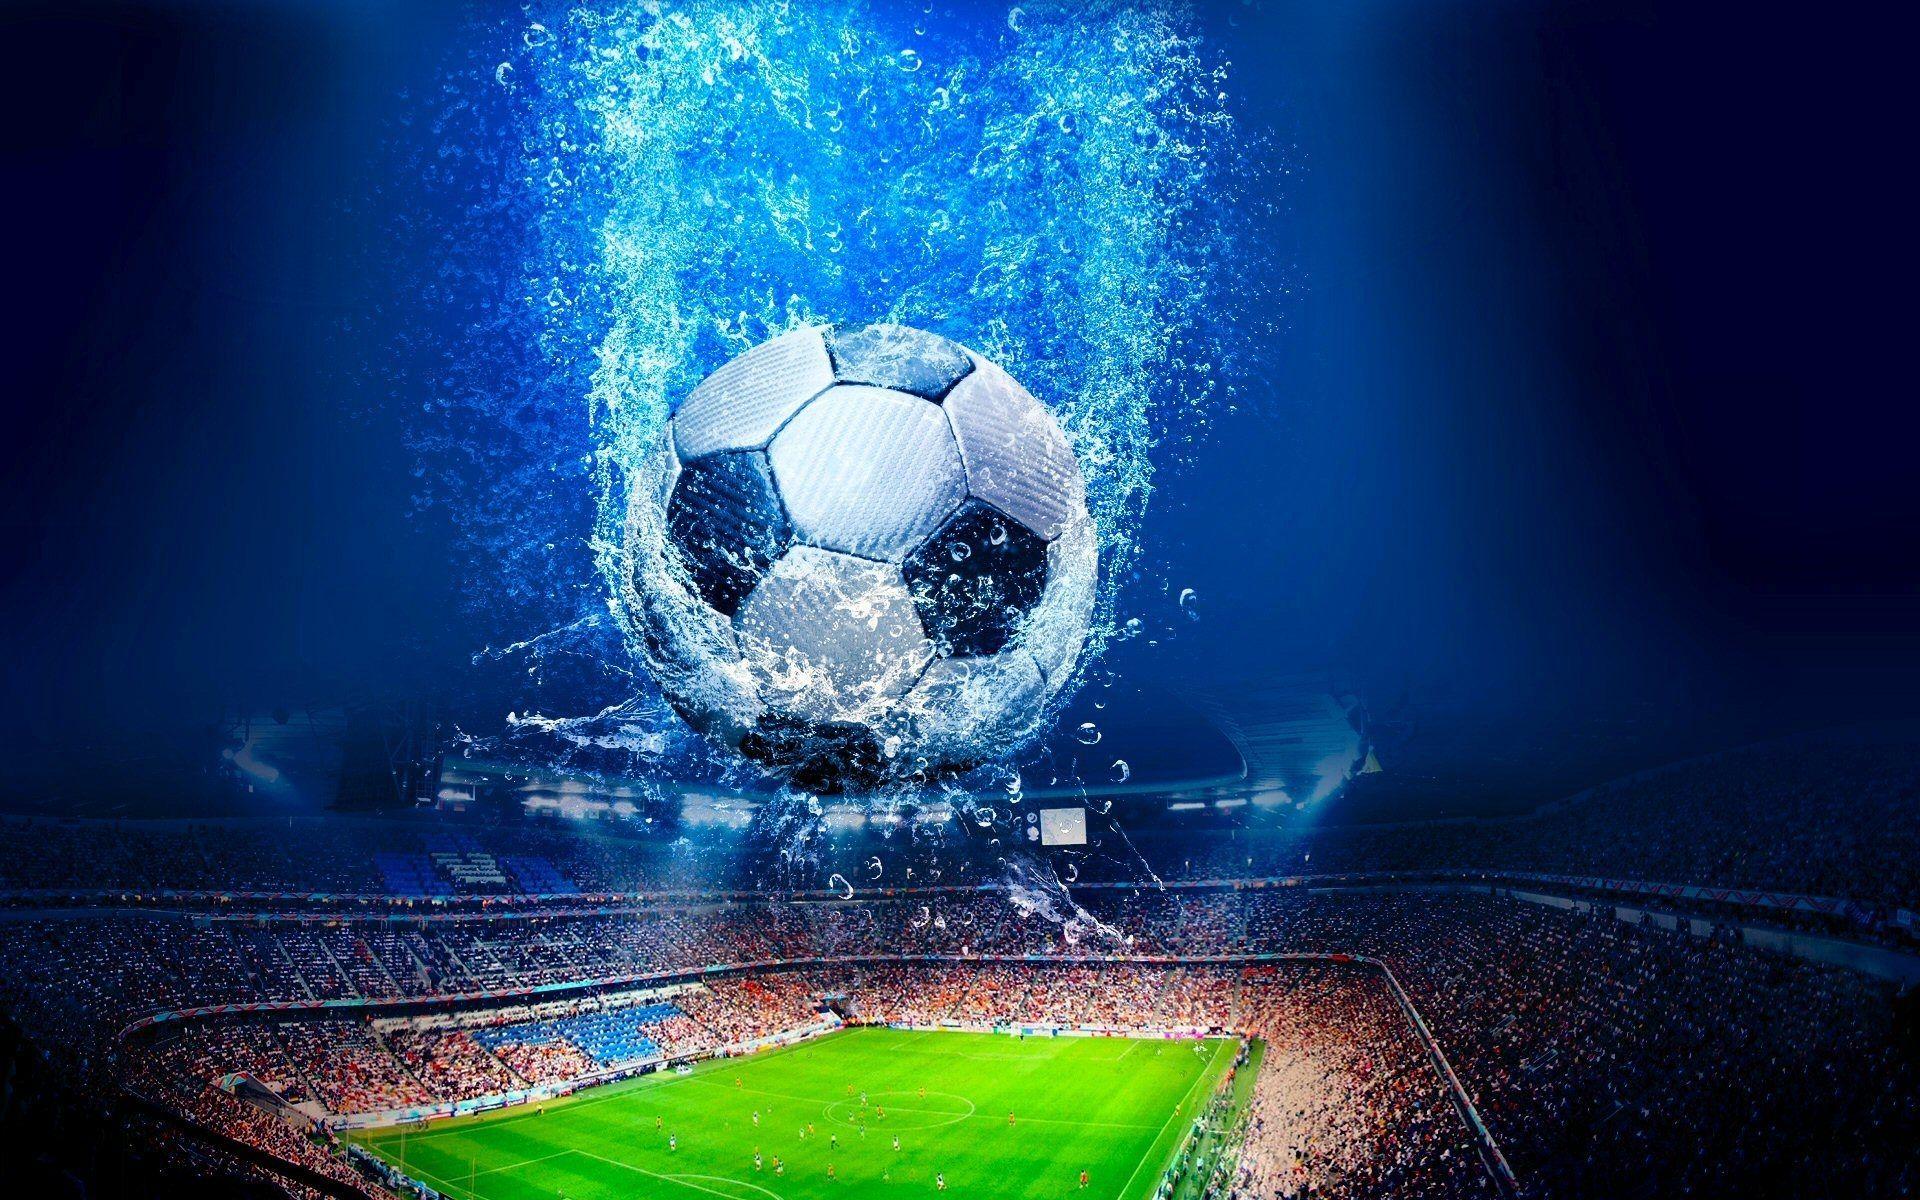 Fantasy Football Wallpaper, PK585 HD Fantasy Football Picture